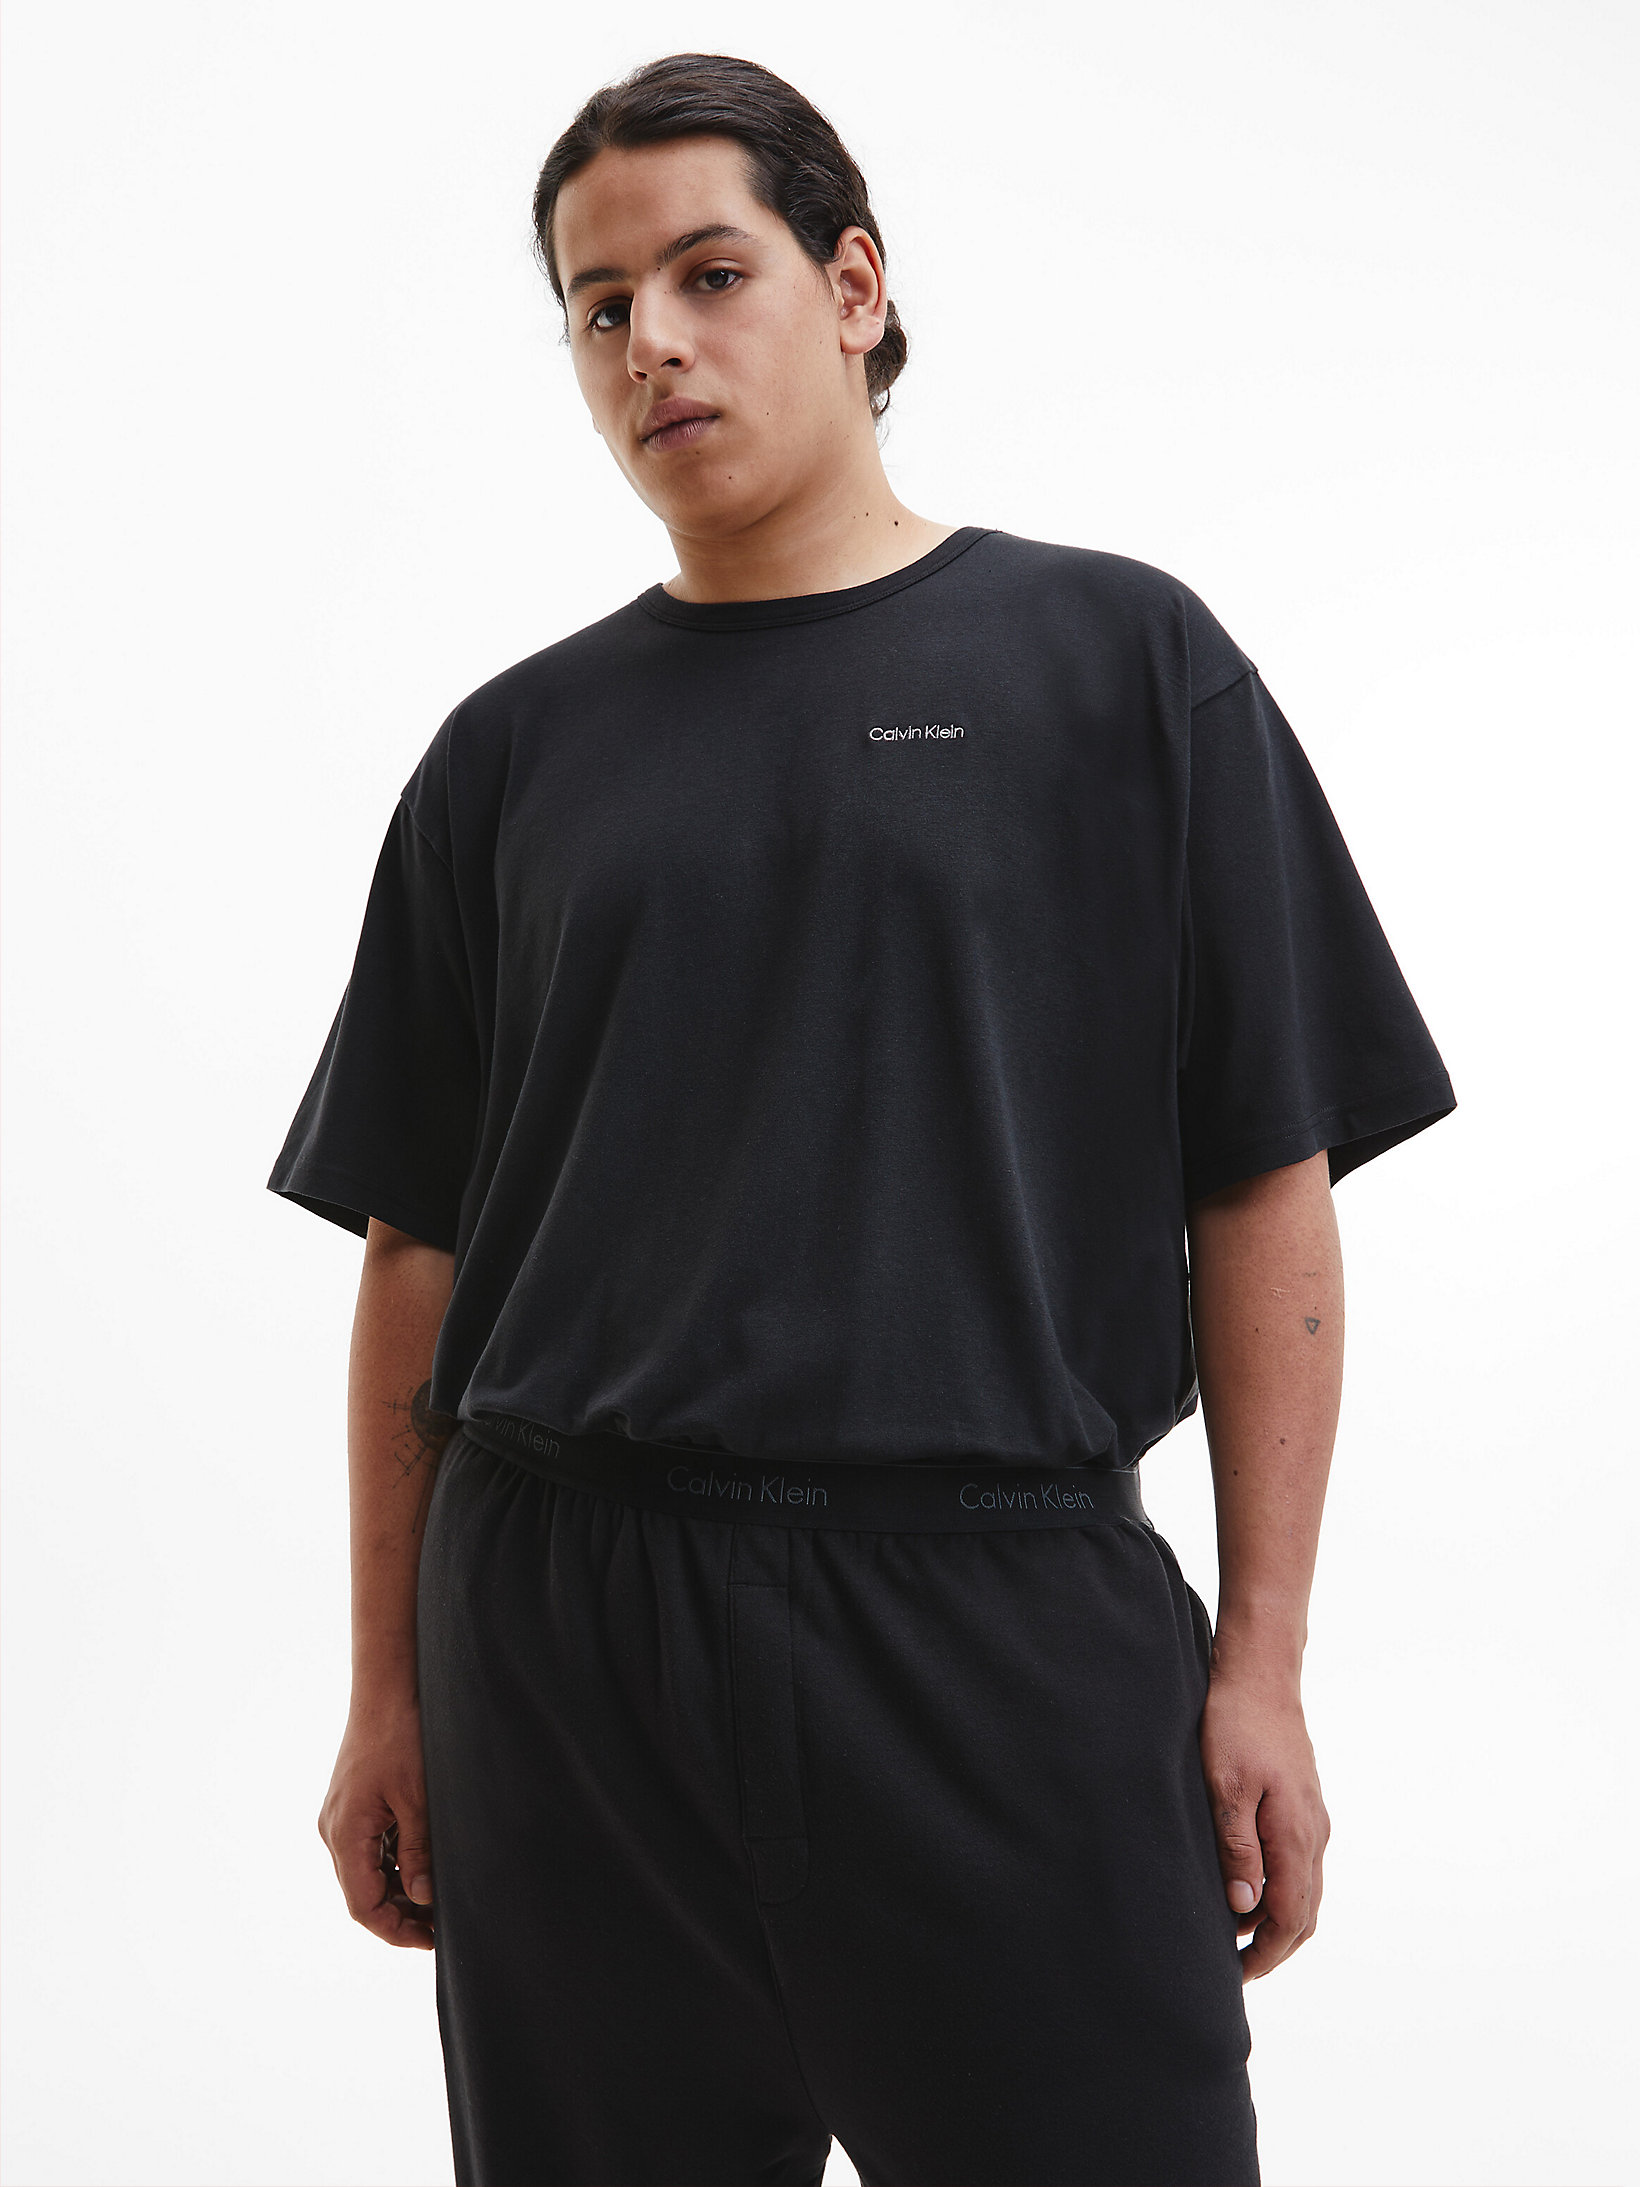 T-Shirt D'intérieur Grande Taille - Modern Cotton > Black > undefined hommes > Calvin Klein